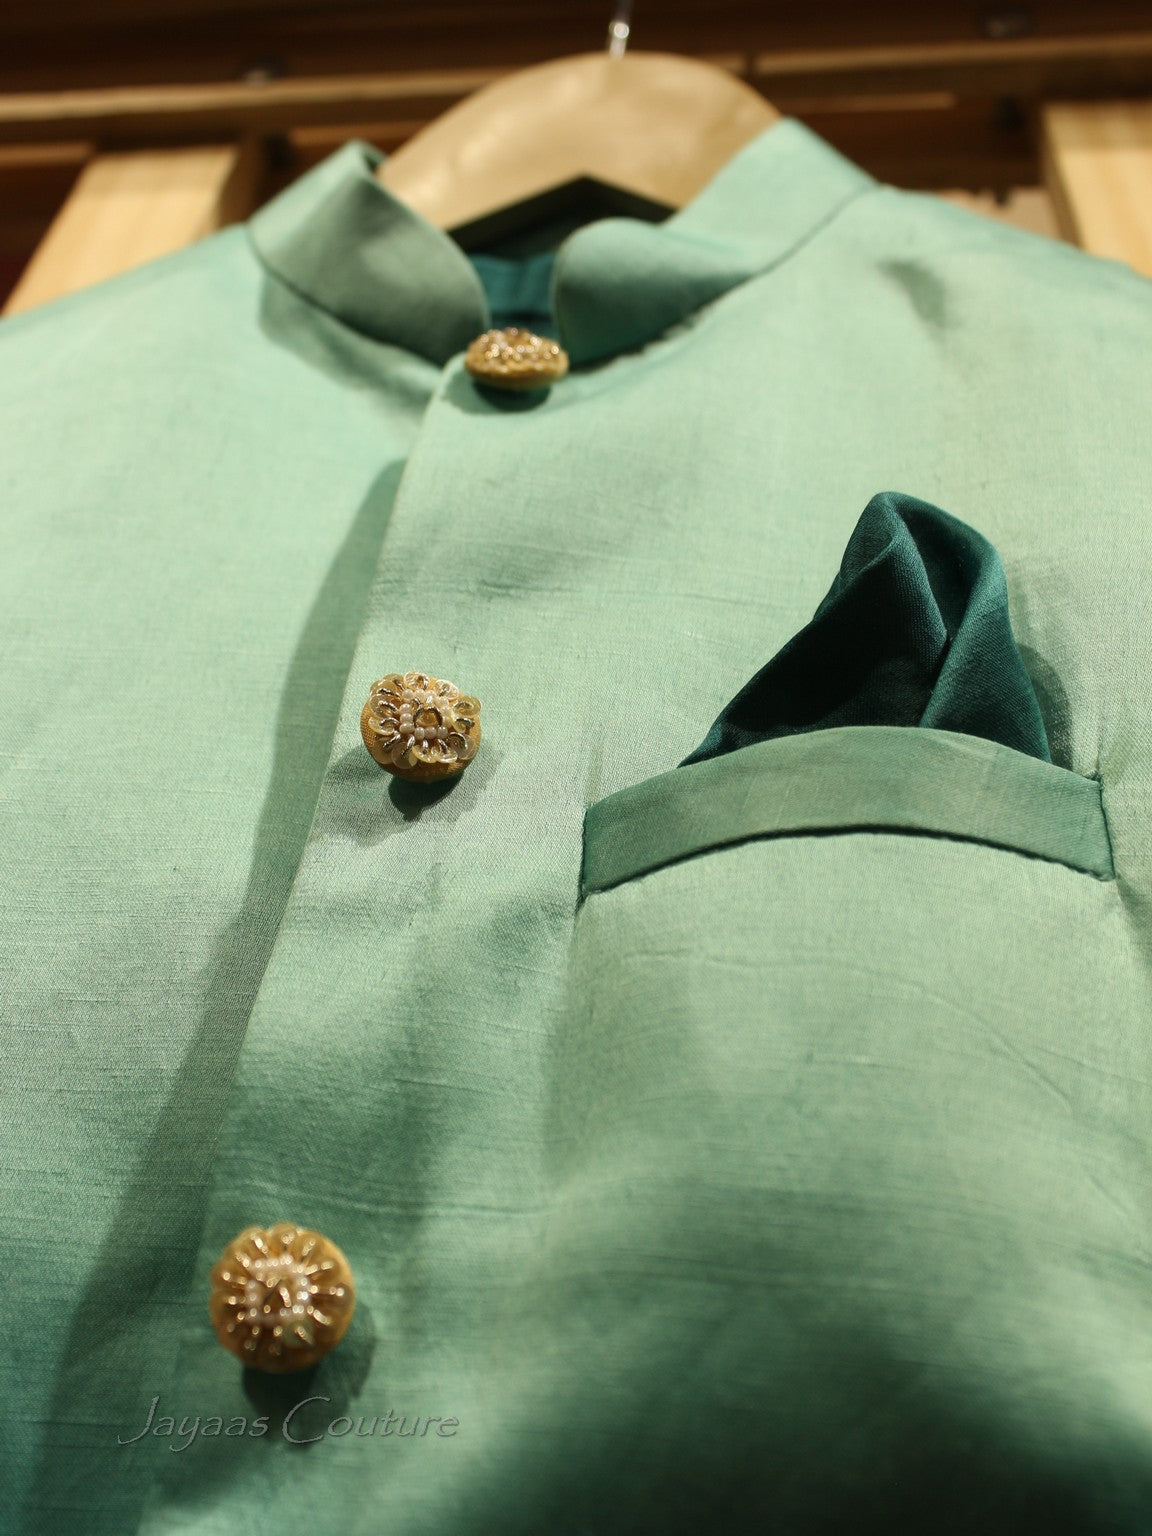 Sea Green shaded neheru jacket with shirt and pants